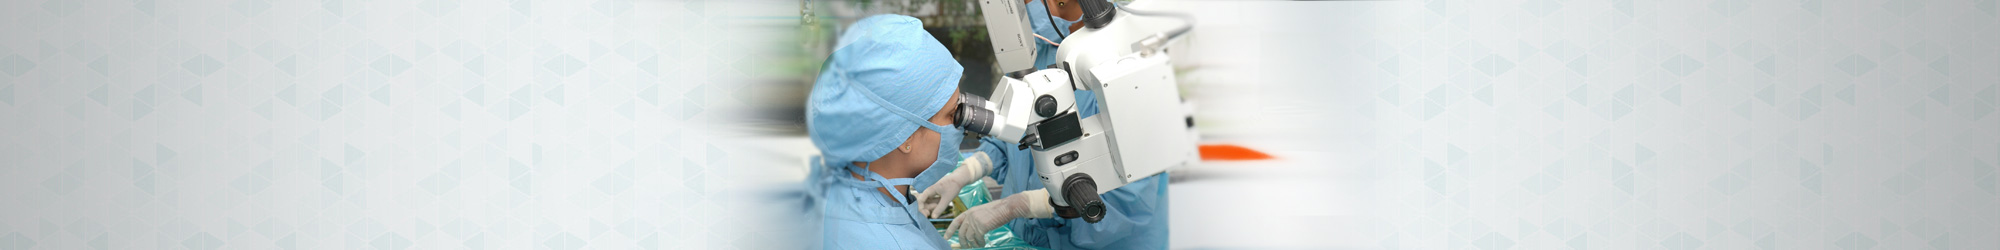 Cataract Treatment in Mumbai, Cataract Surgery In India